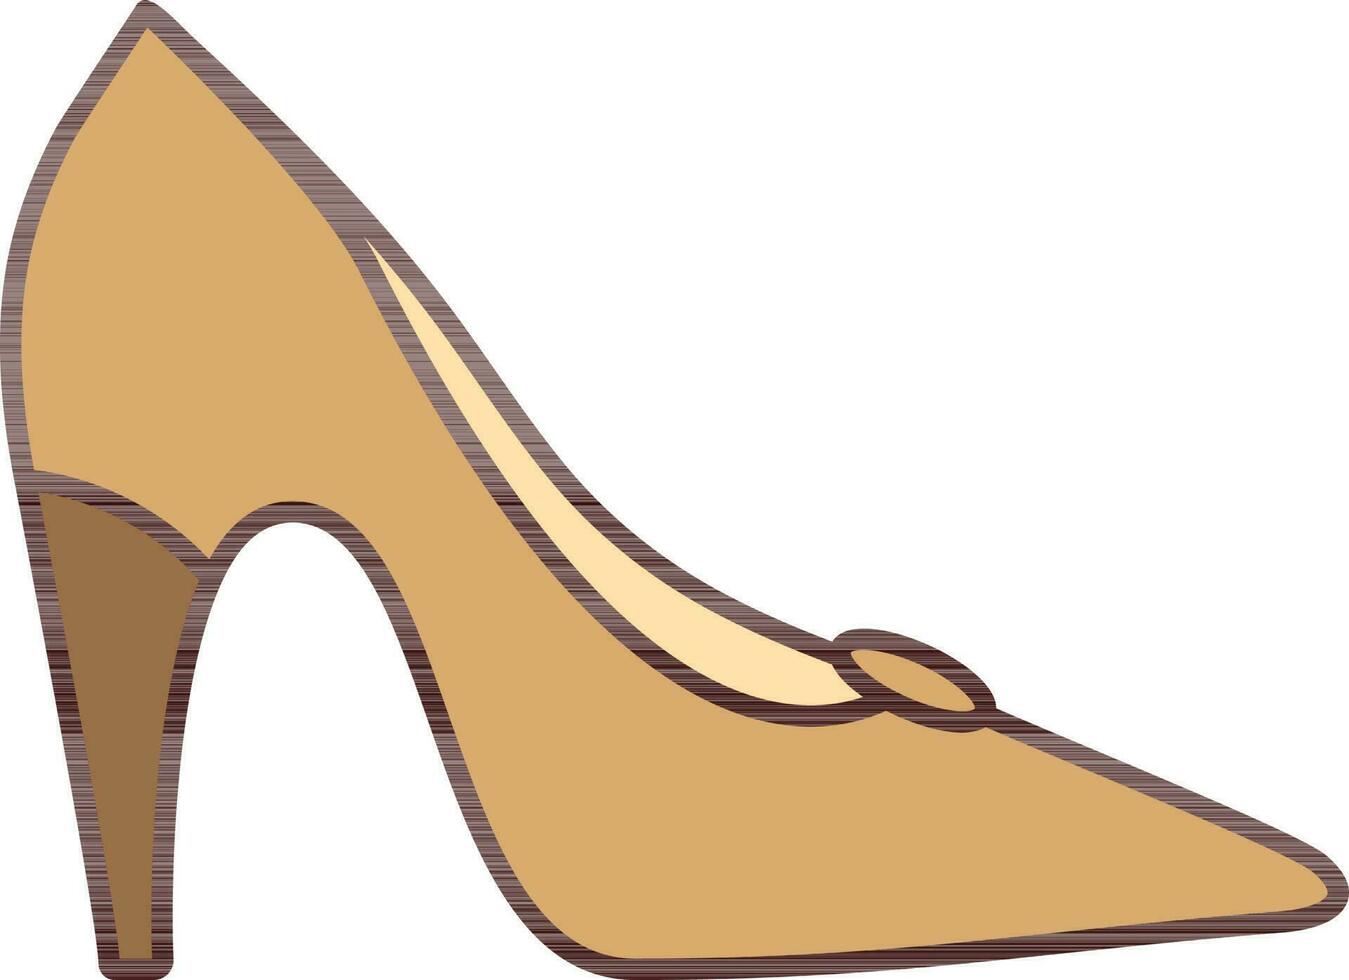 High Heels Icon In Brown Color. vector